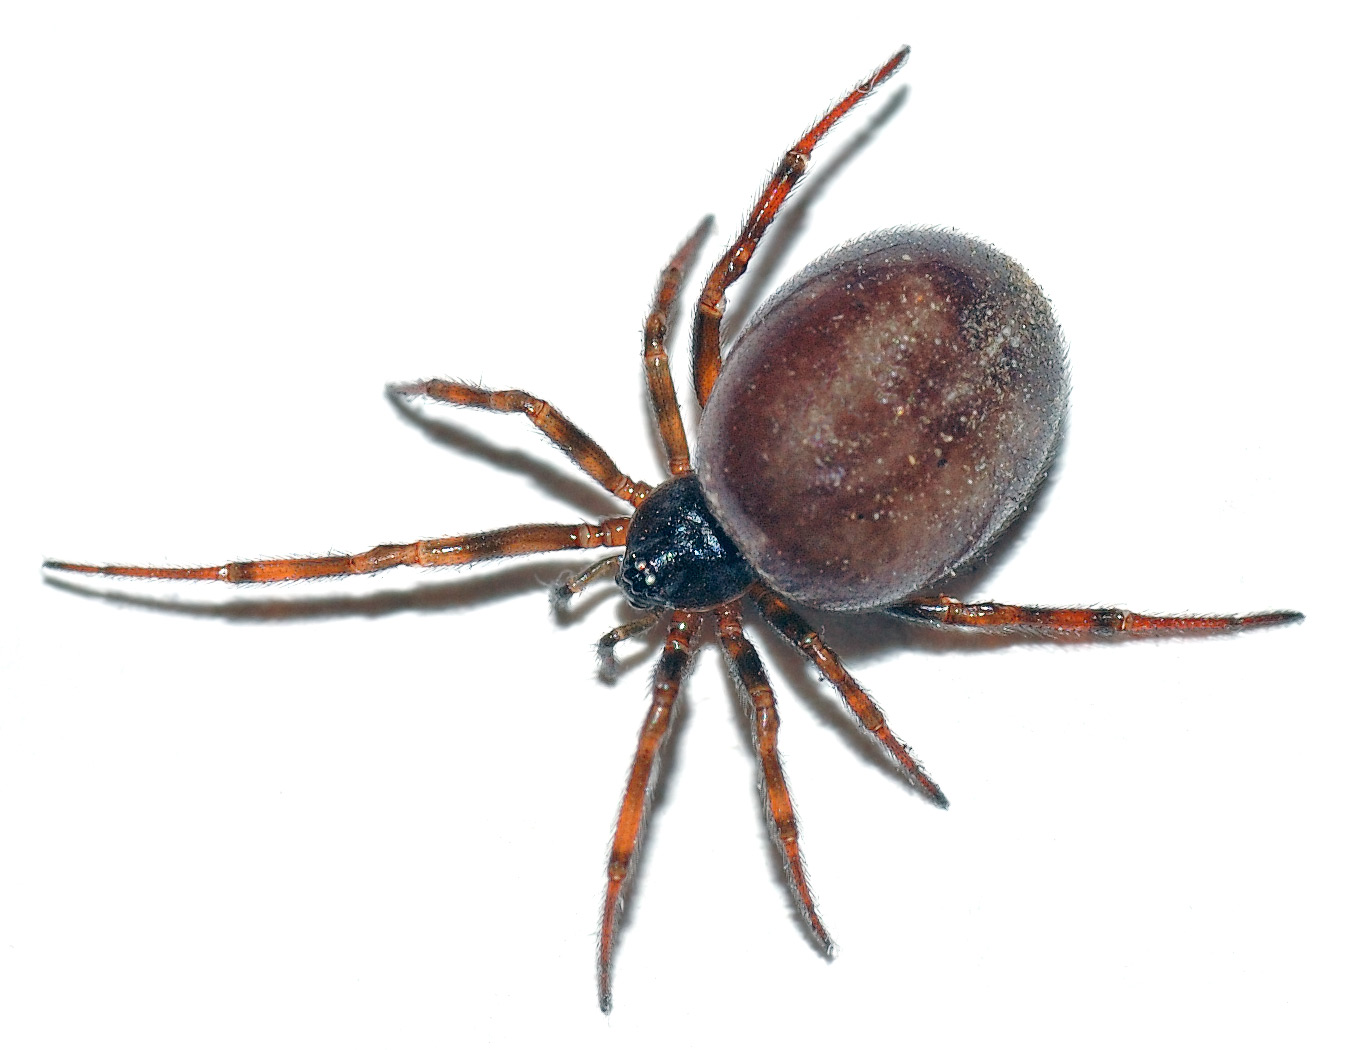 Arachnid - Wikipedia